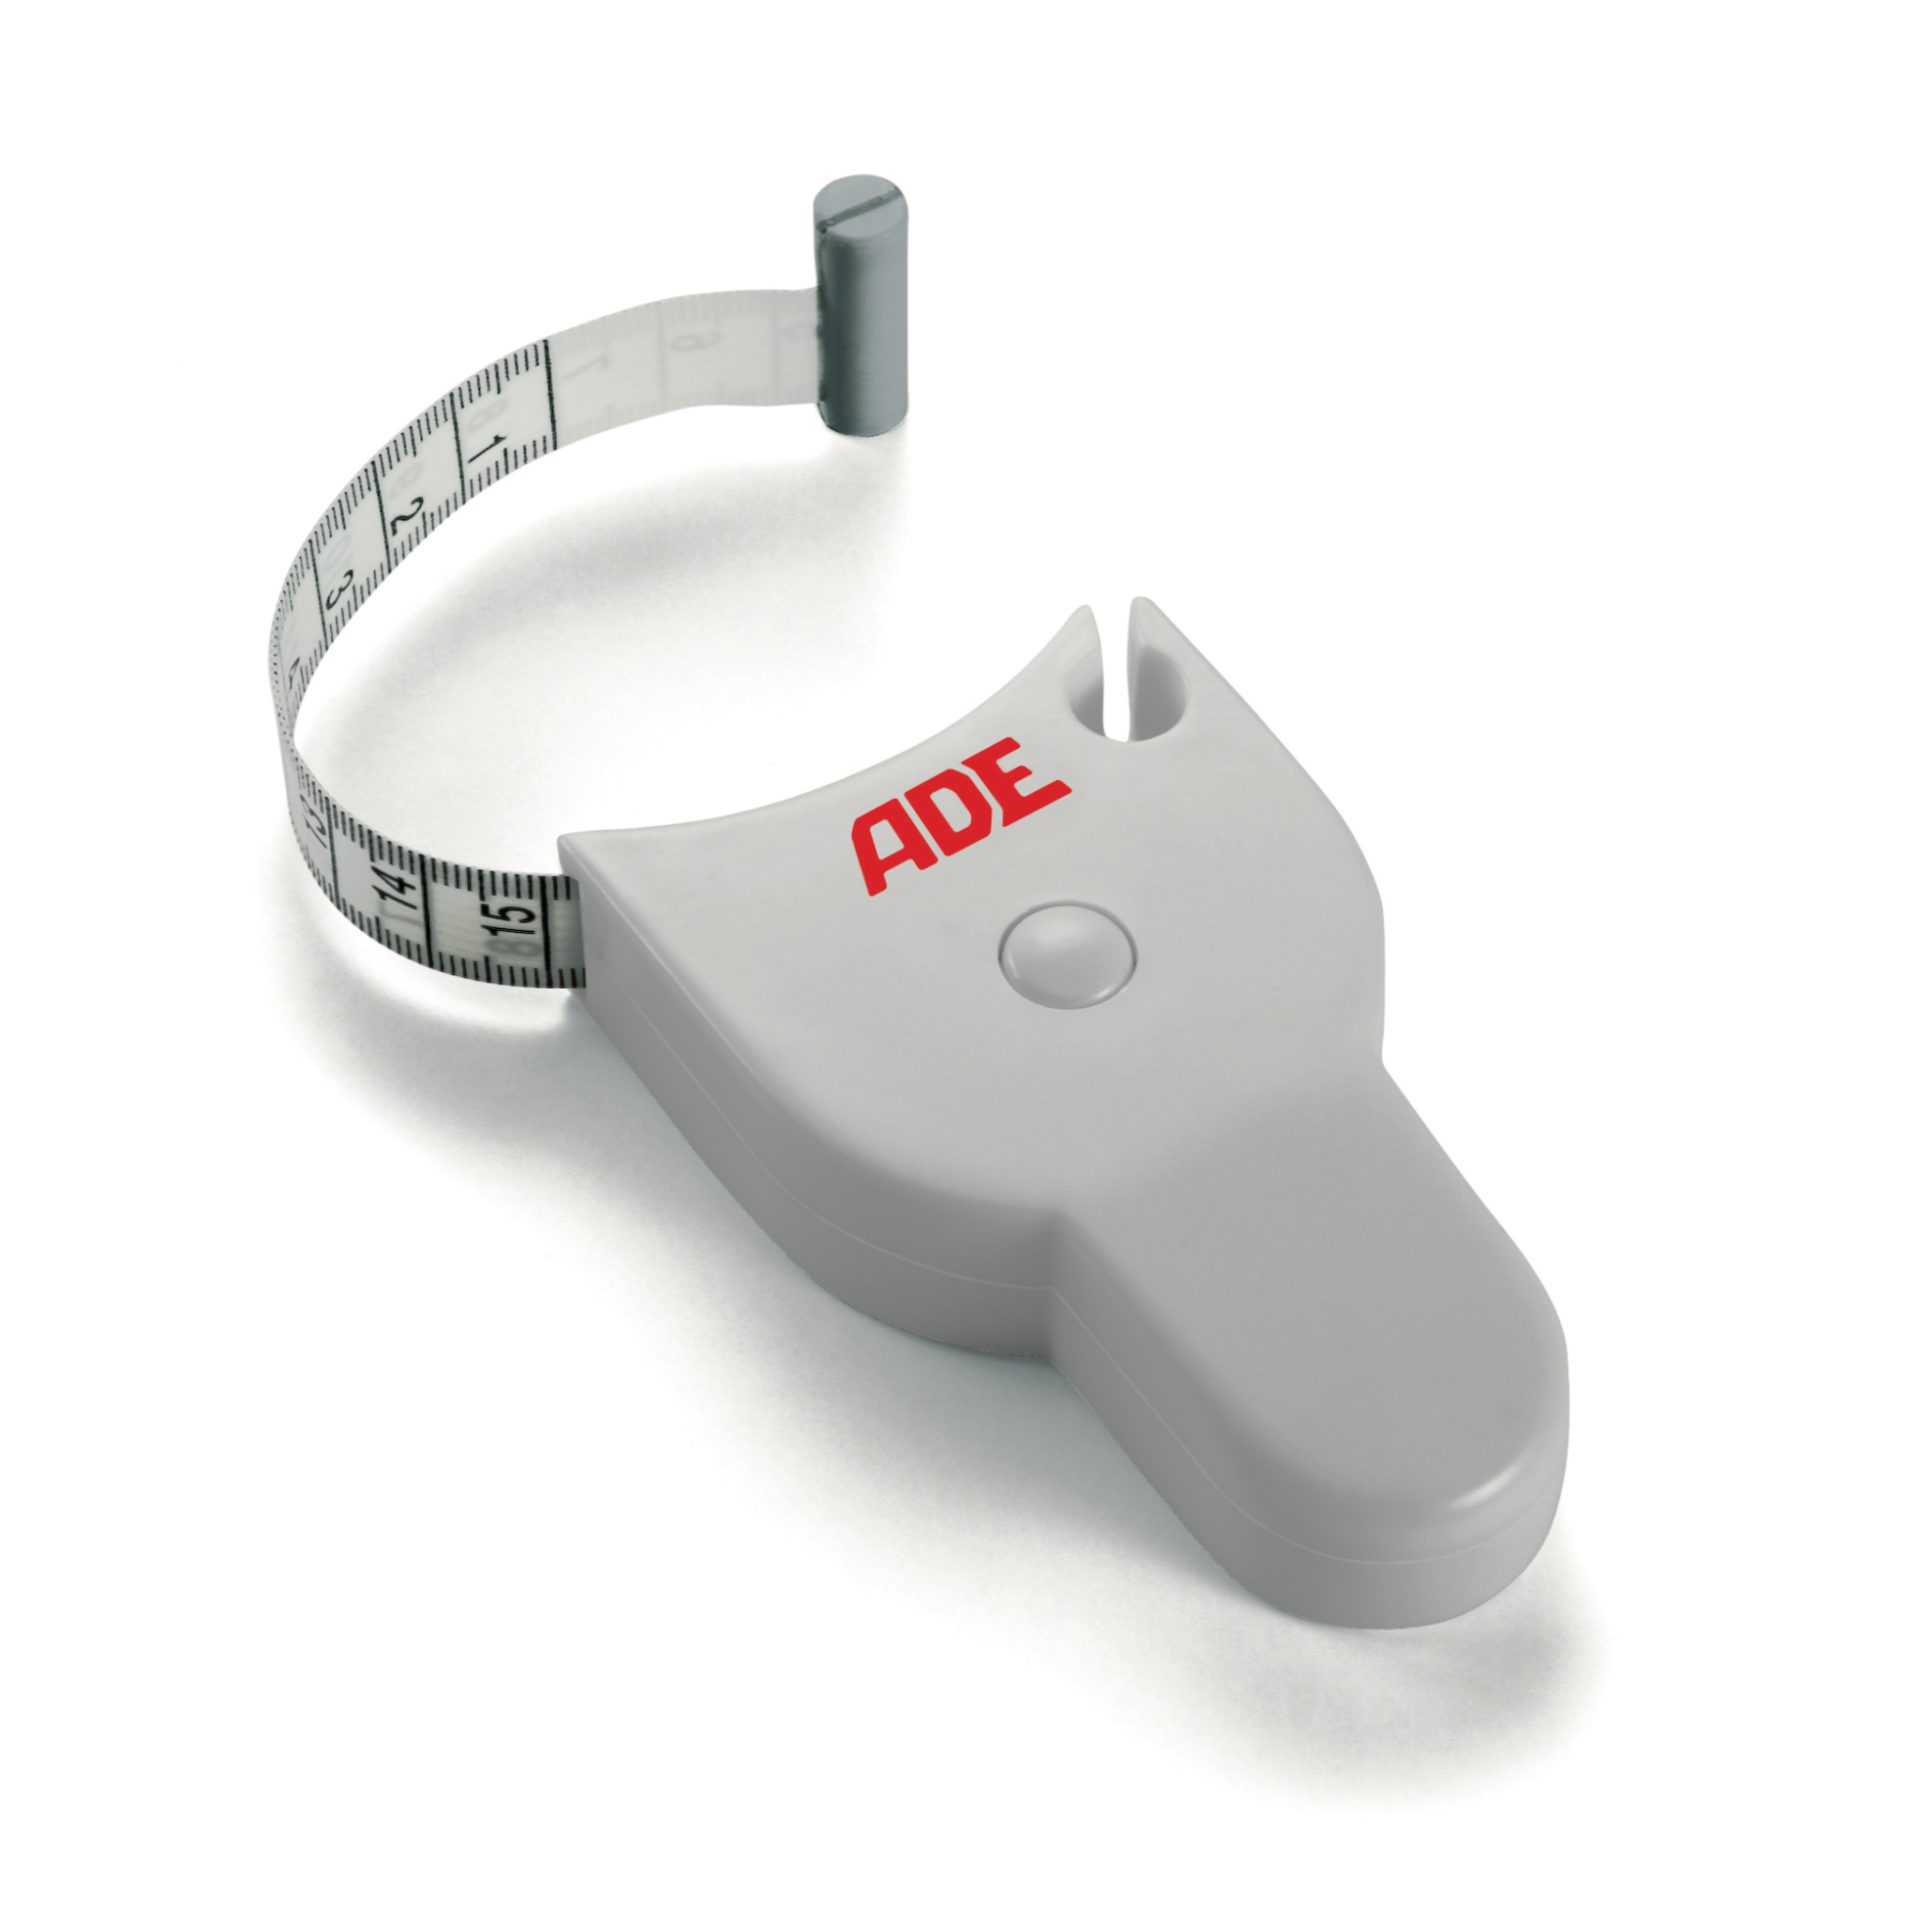 ADE Baby Measuring Tape Range 50-1500mm, 1mm Grad 55x20x80mm